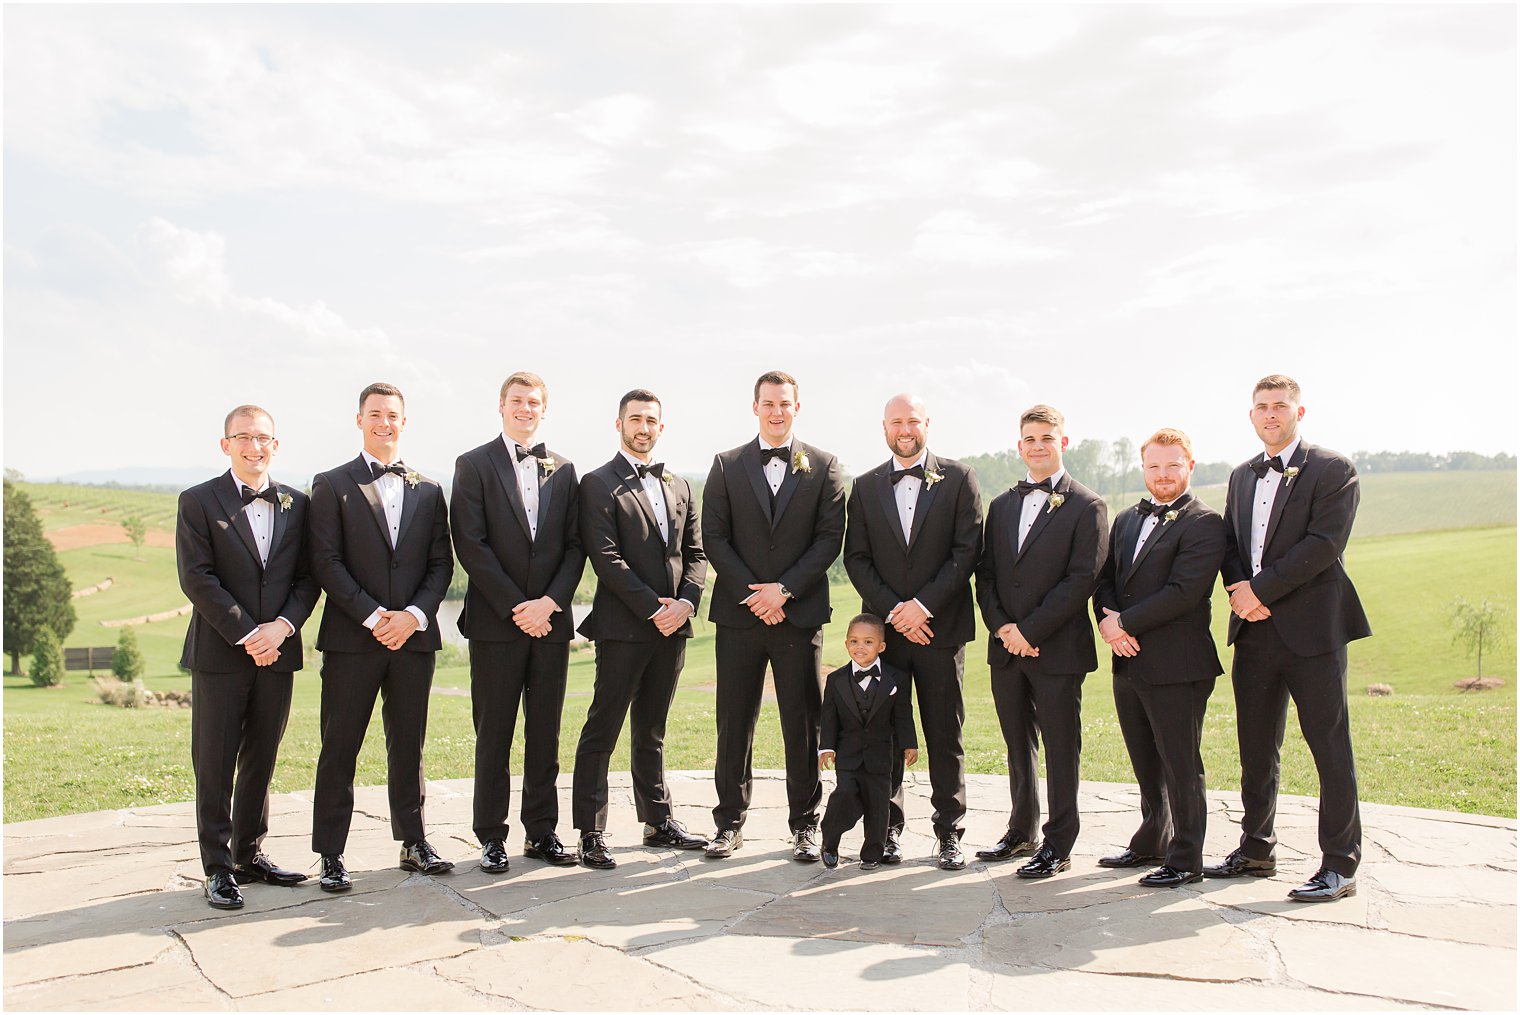 Classic groomsmen shot in black tuxedos